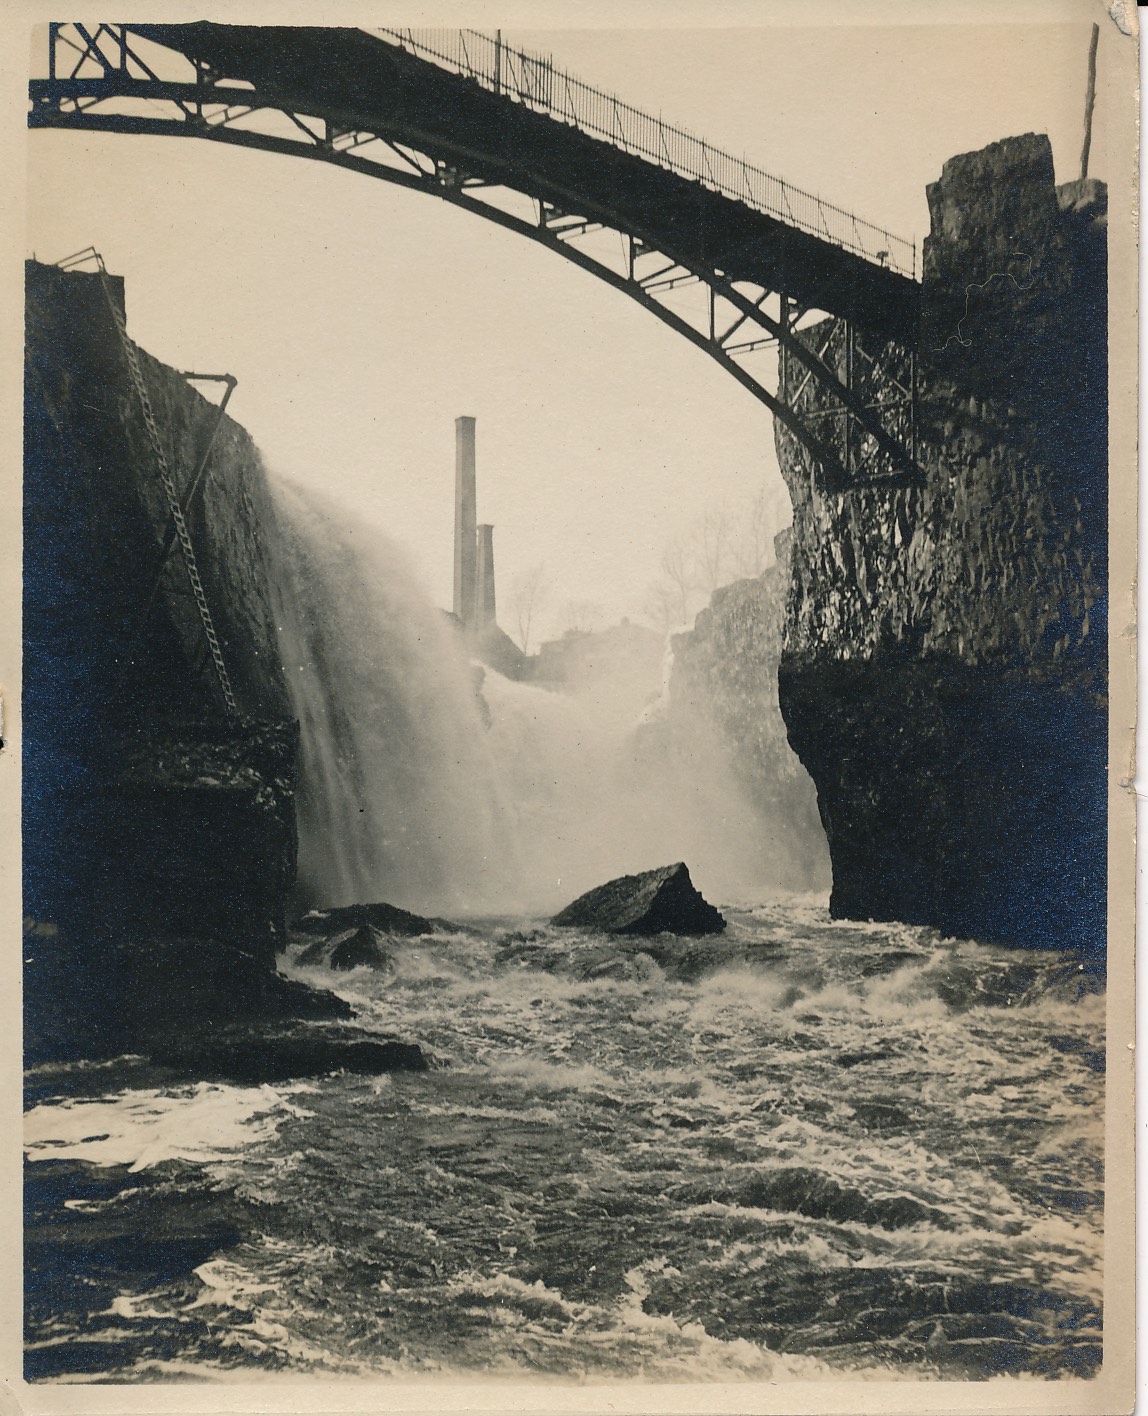 Passaic Falls, Paterson 1913
Photo from Bill Ridge
